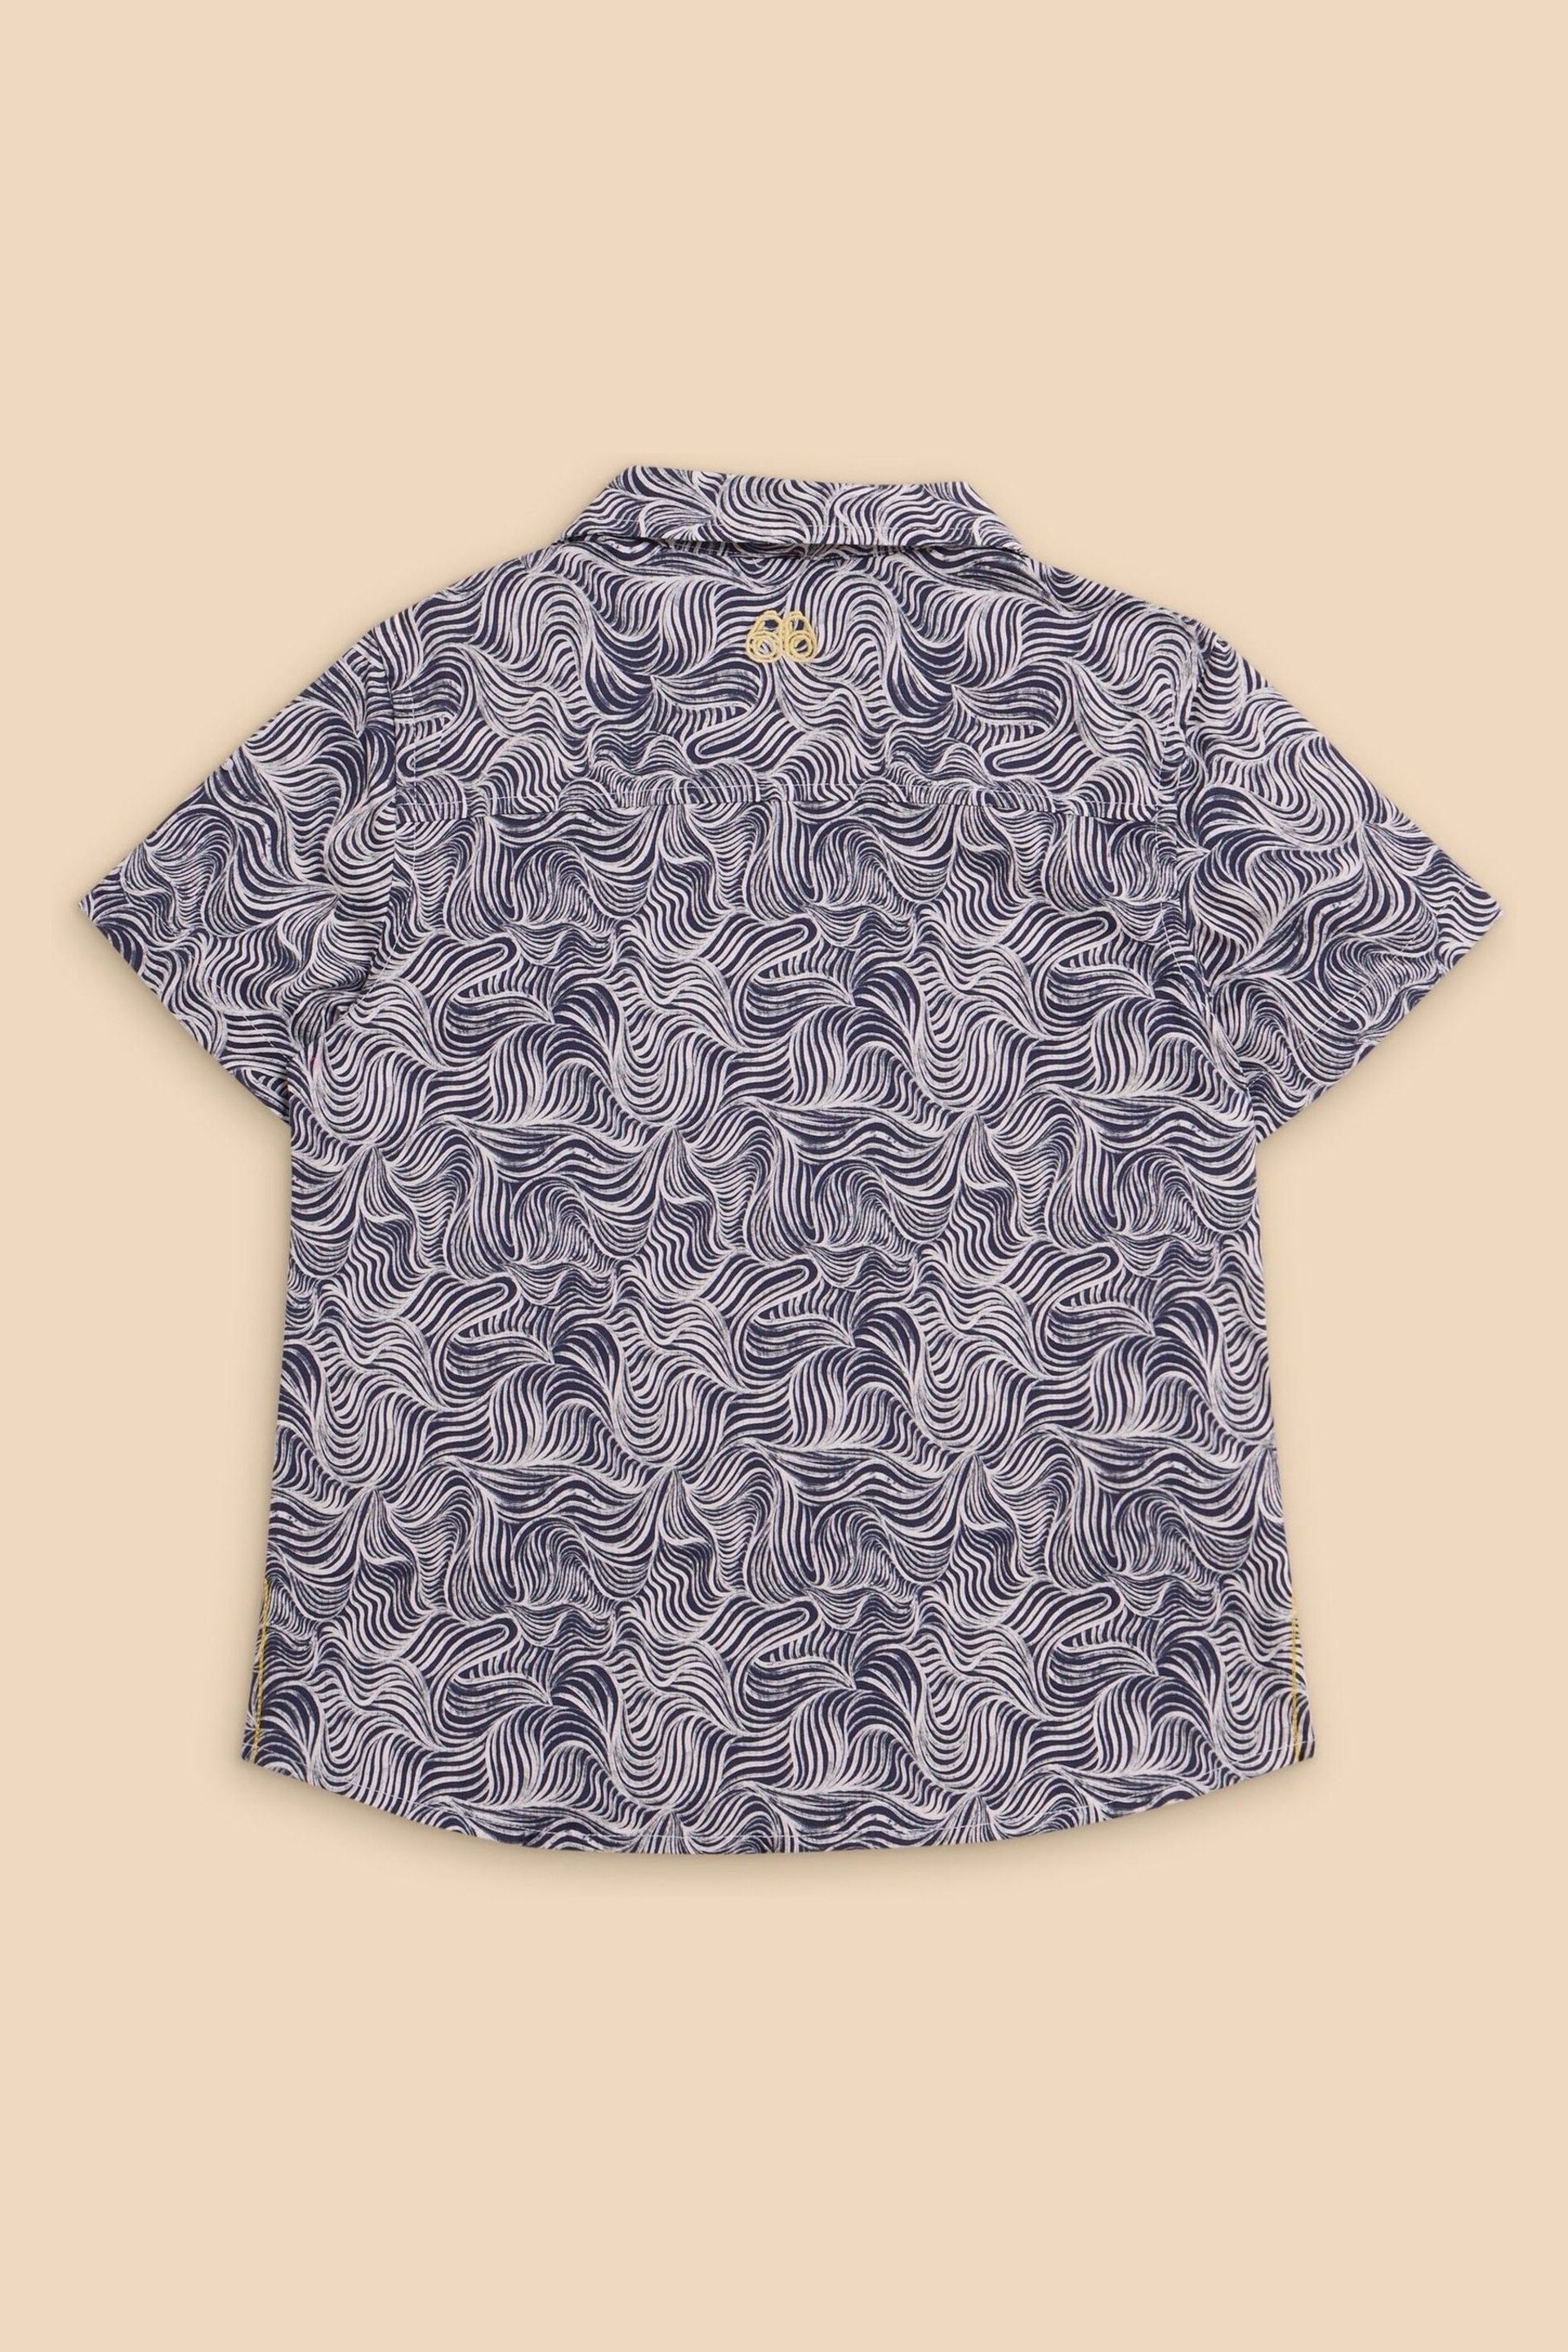 White Stuff Multi Mini Waves Printed Short Sleeve Shirt - Image 2 of 3